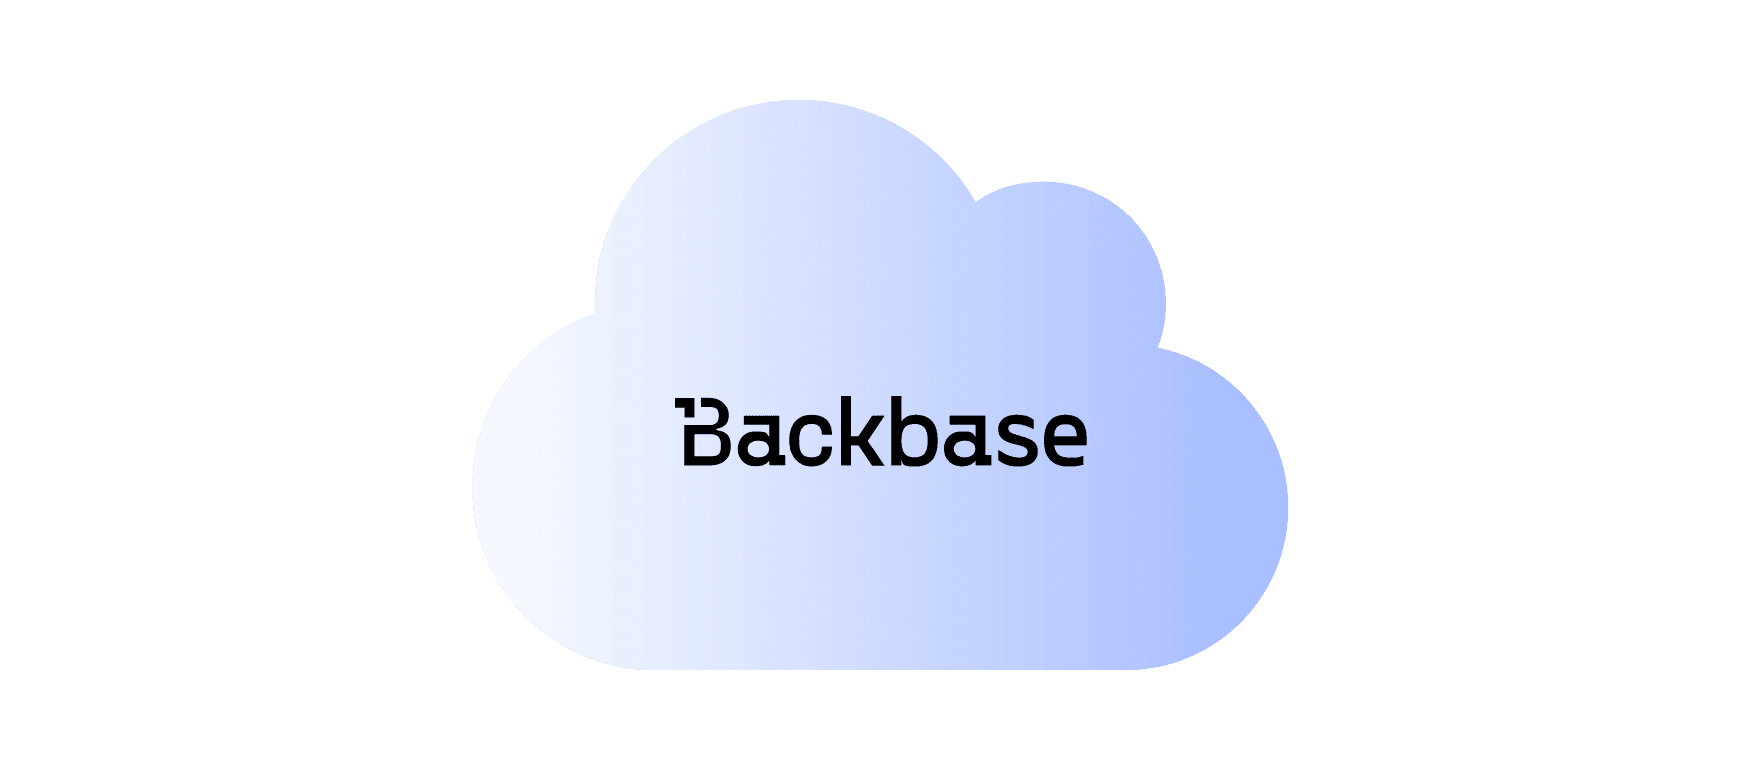 Cloud backbase cloud deployment